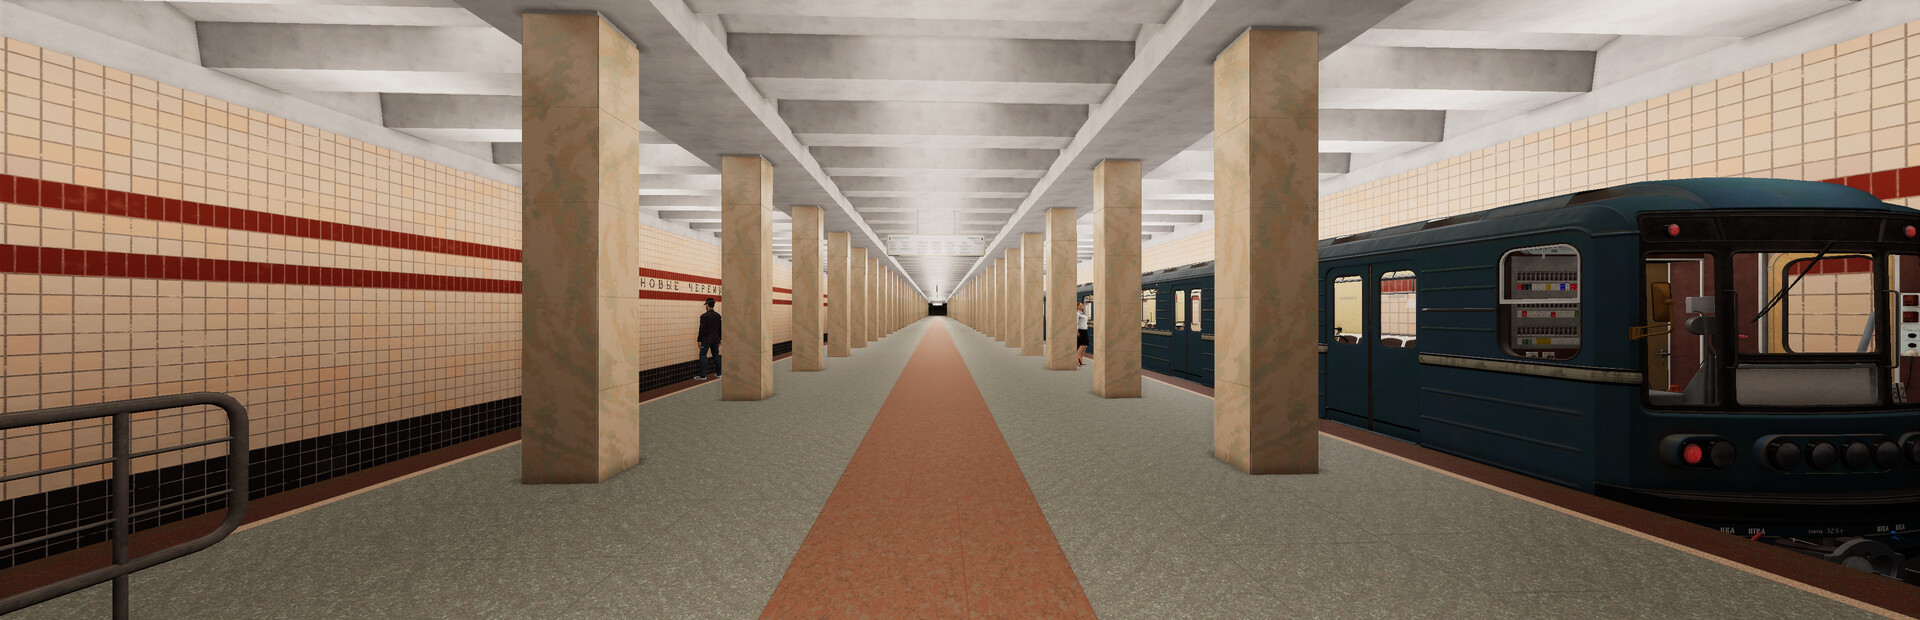 Metro Simulator 2 cover image